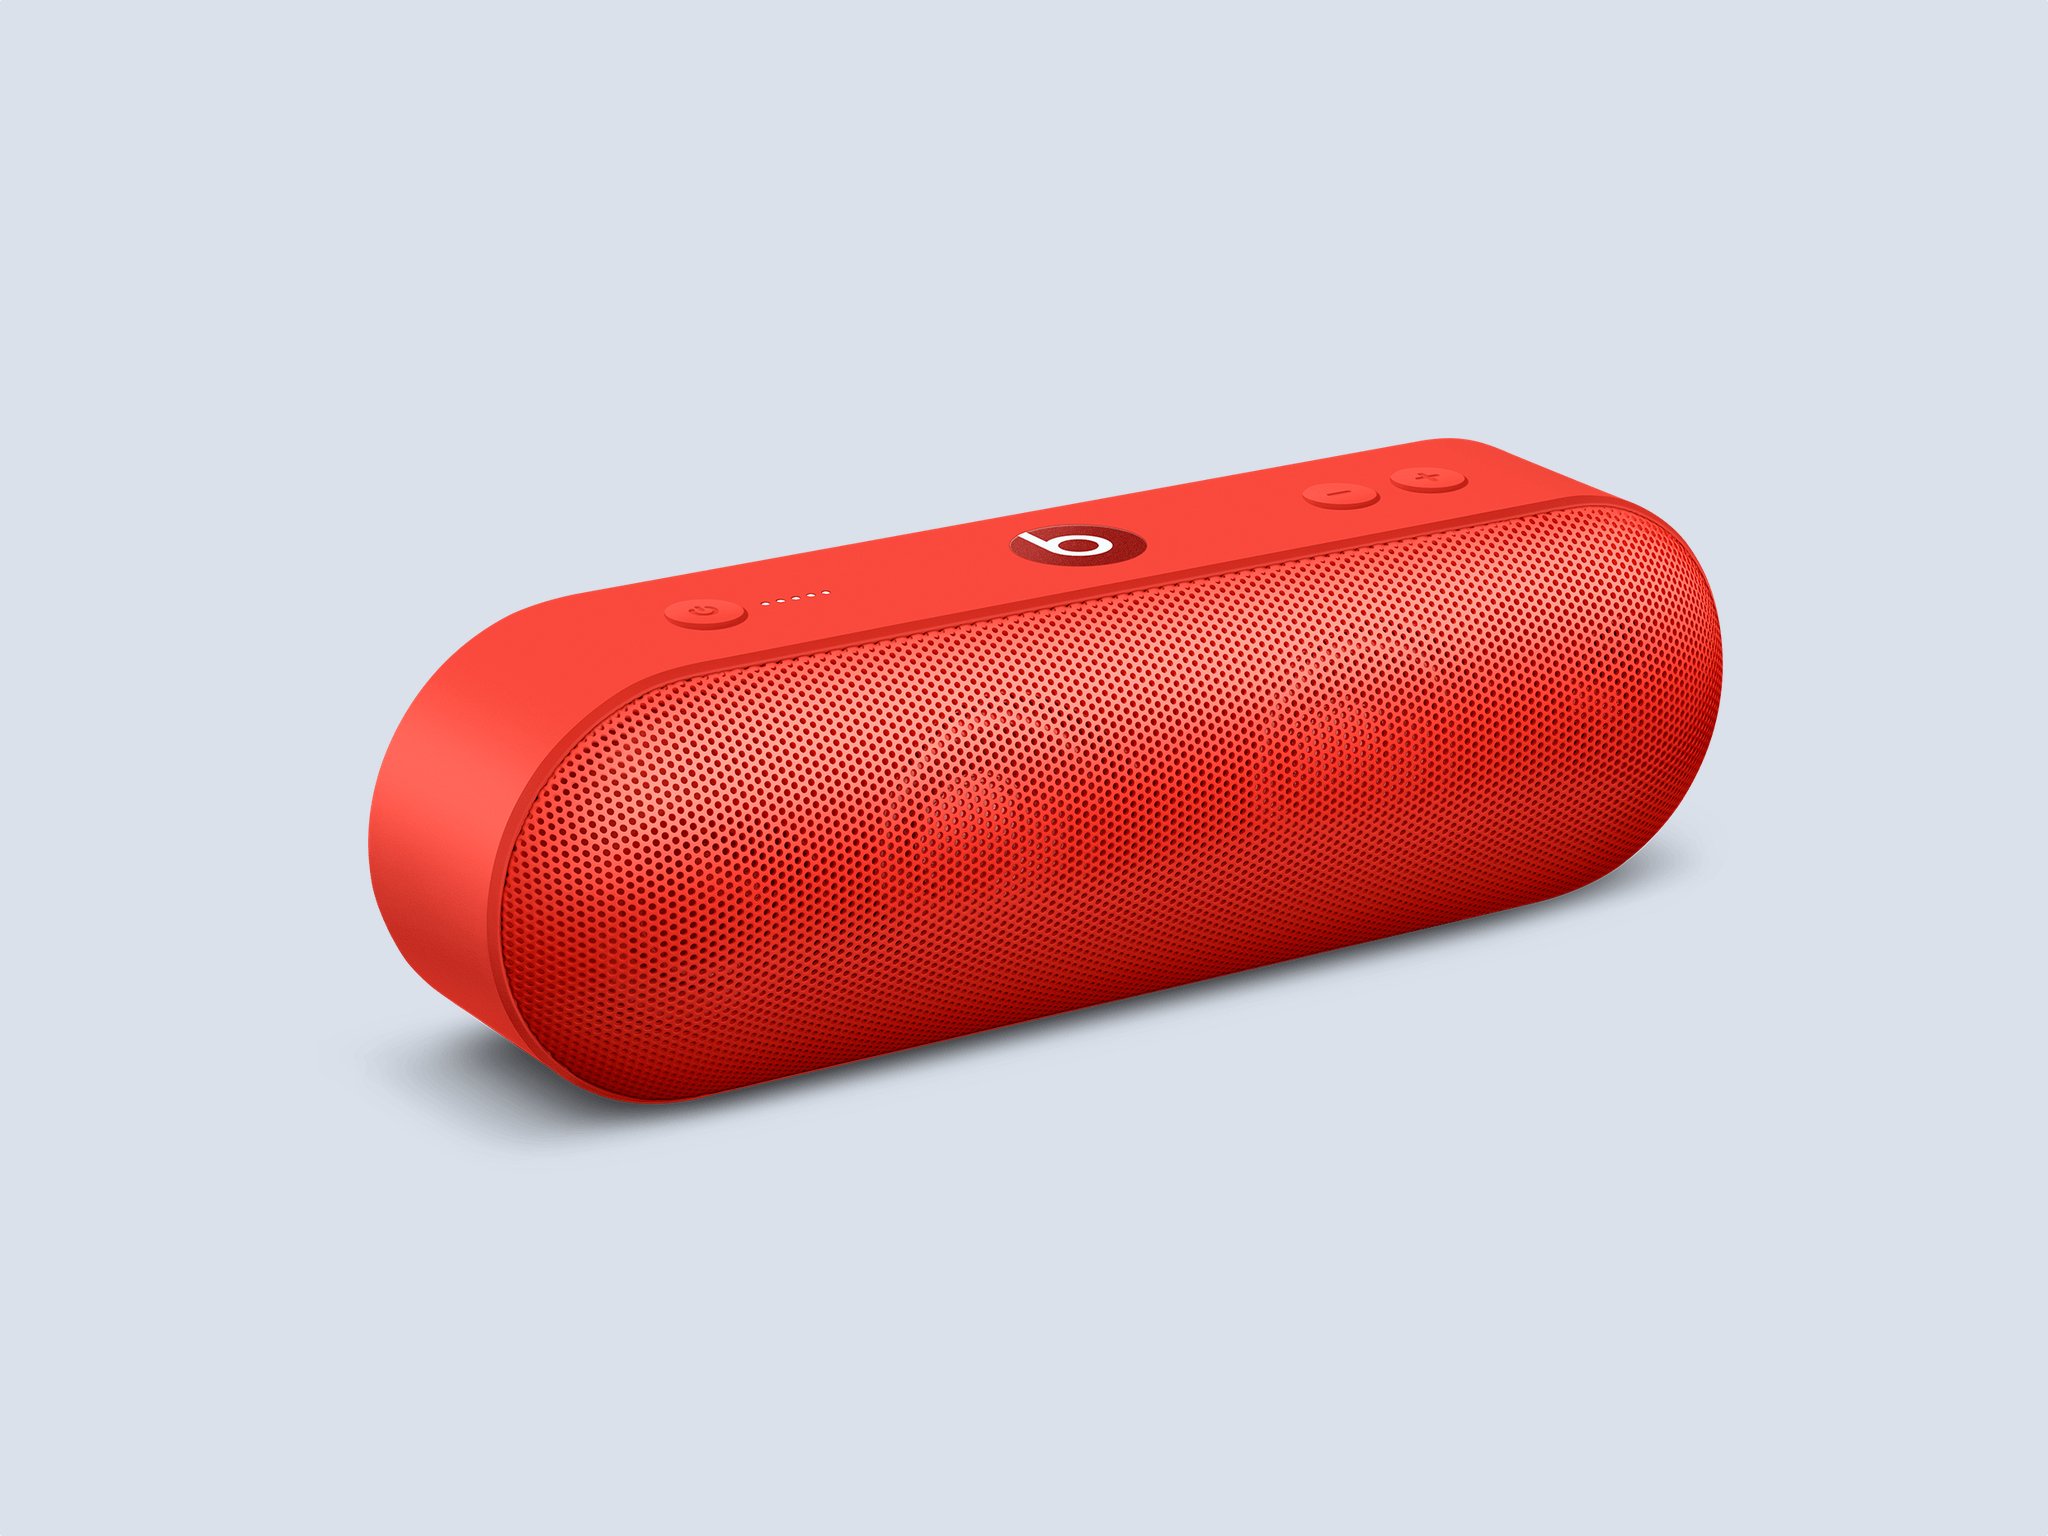 Flipboard: Beats Pill+ Bluetooth Speaker offers 12 hours of playback